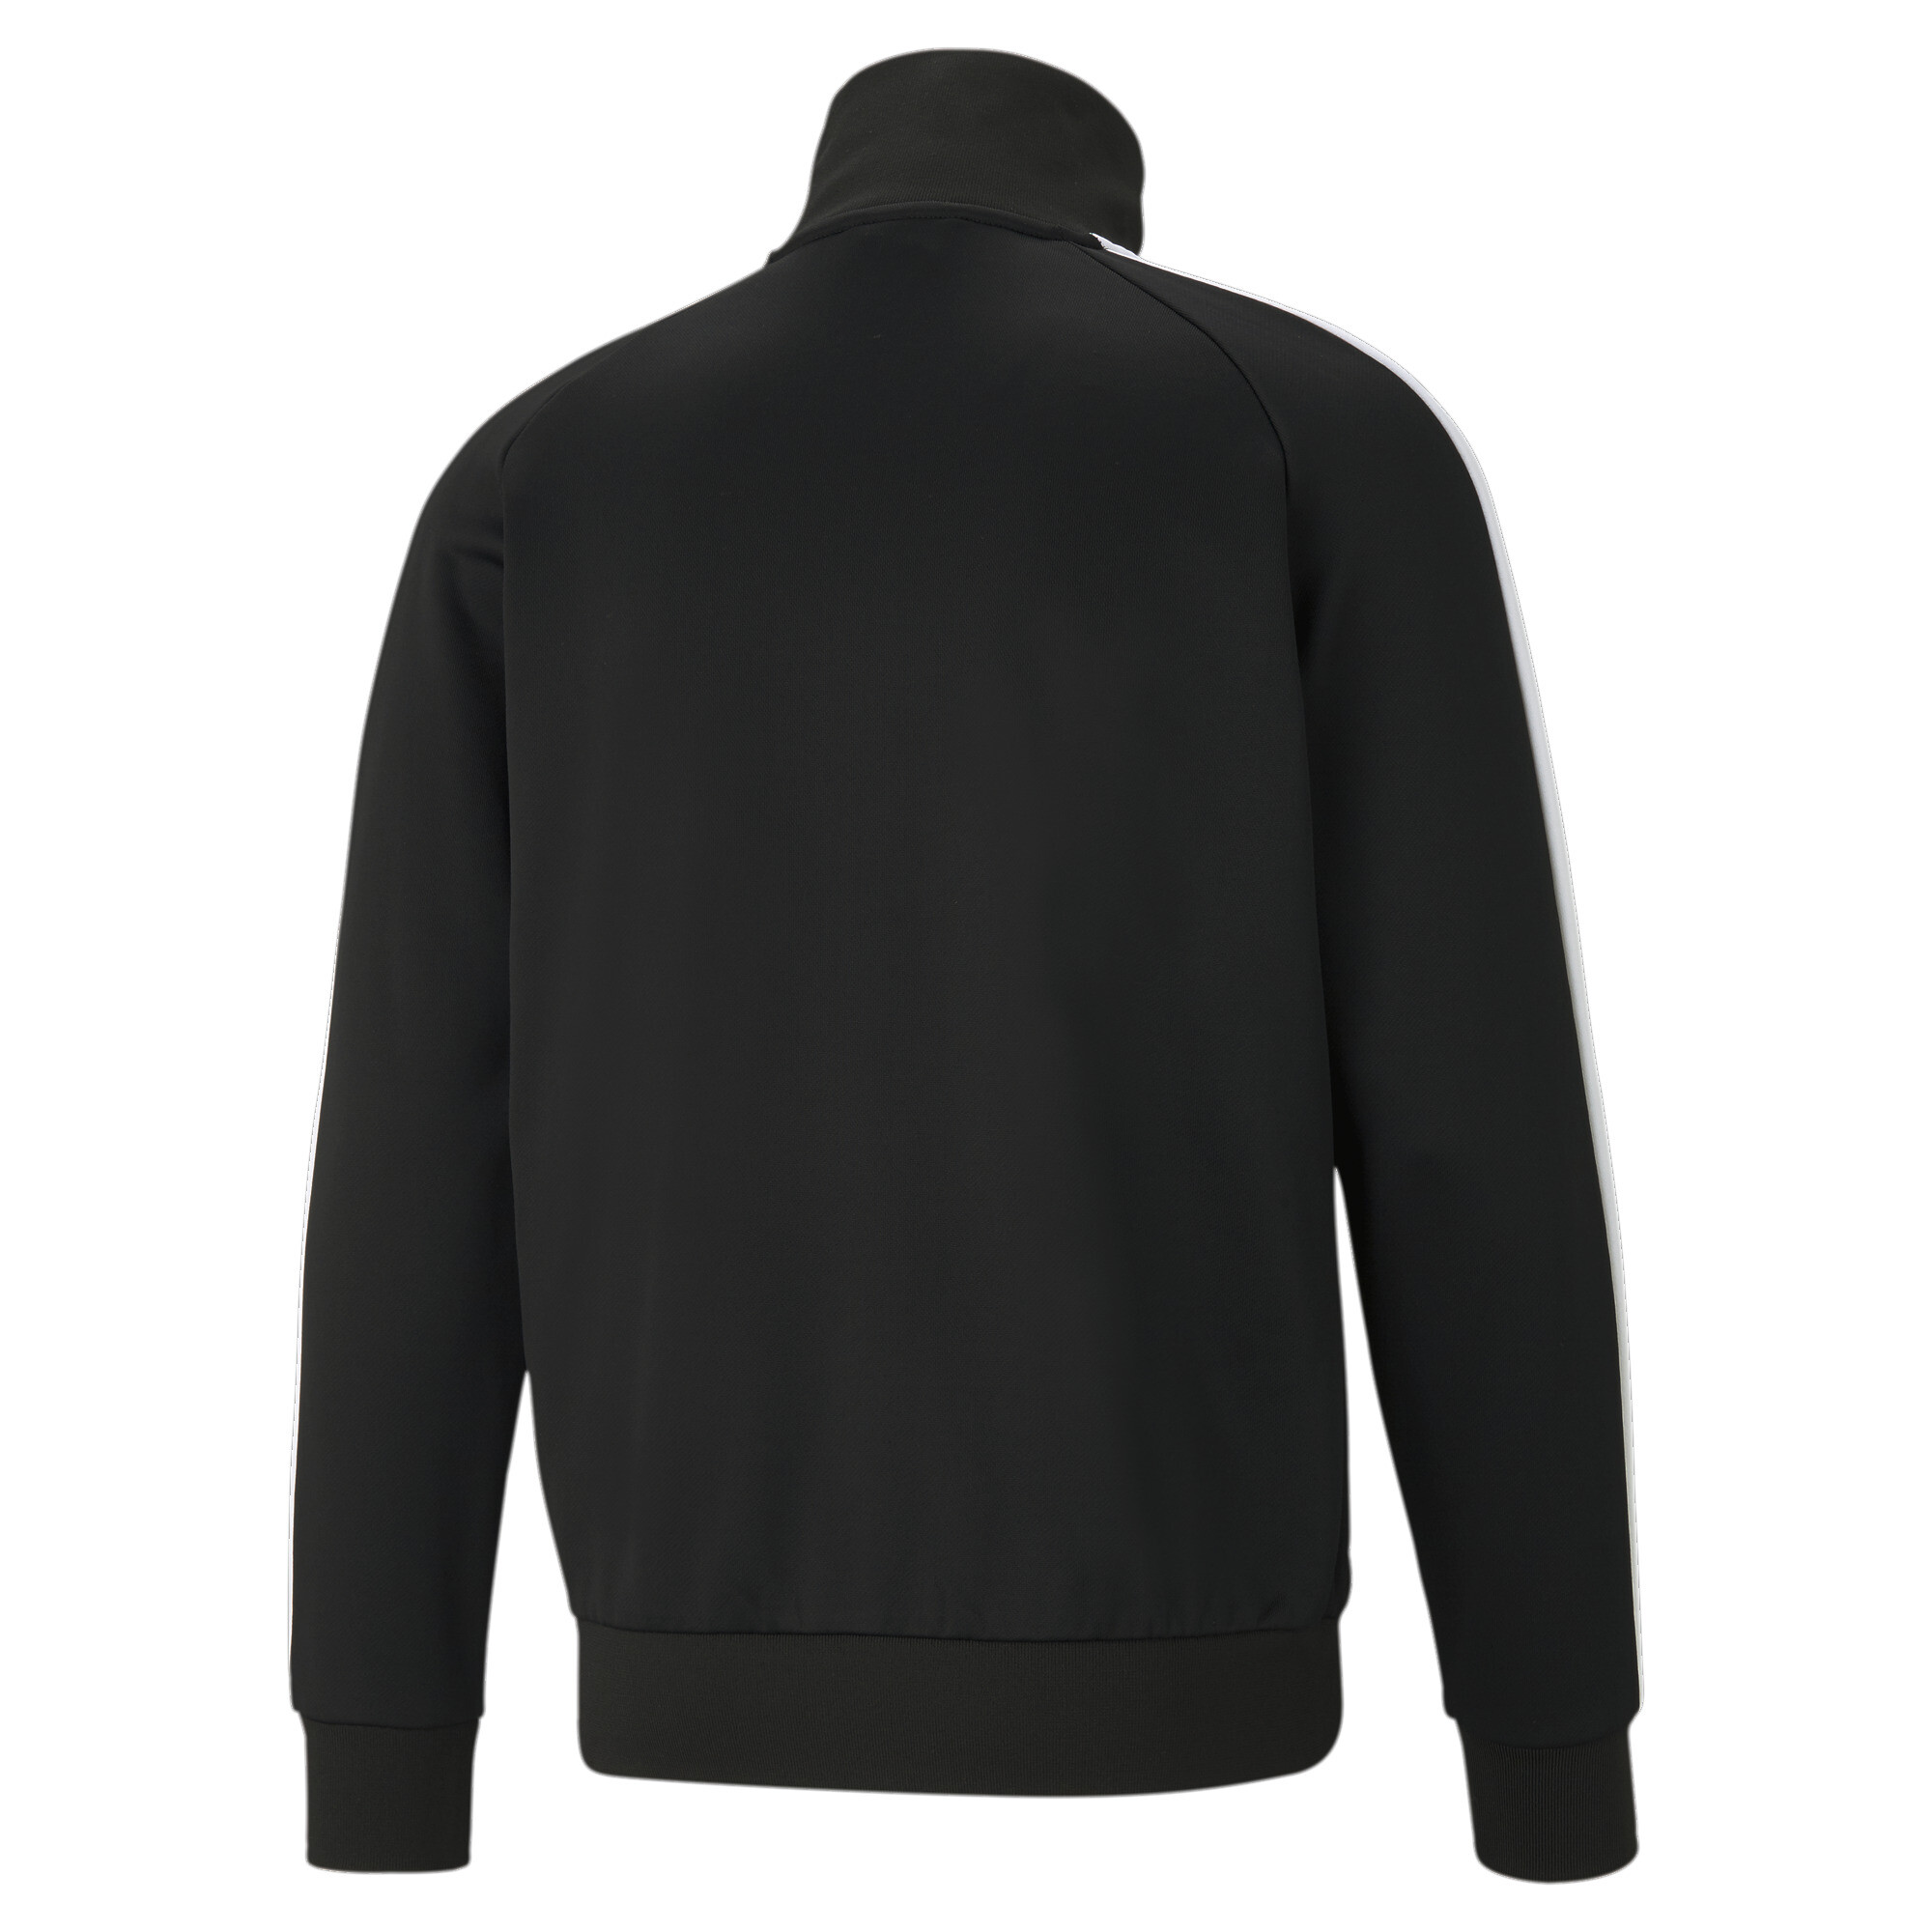 Men's PUMA Iconic T7 Track Jacket In Black, Size XL